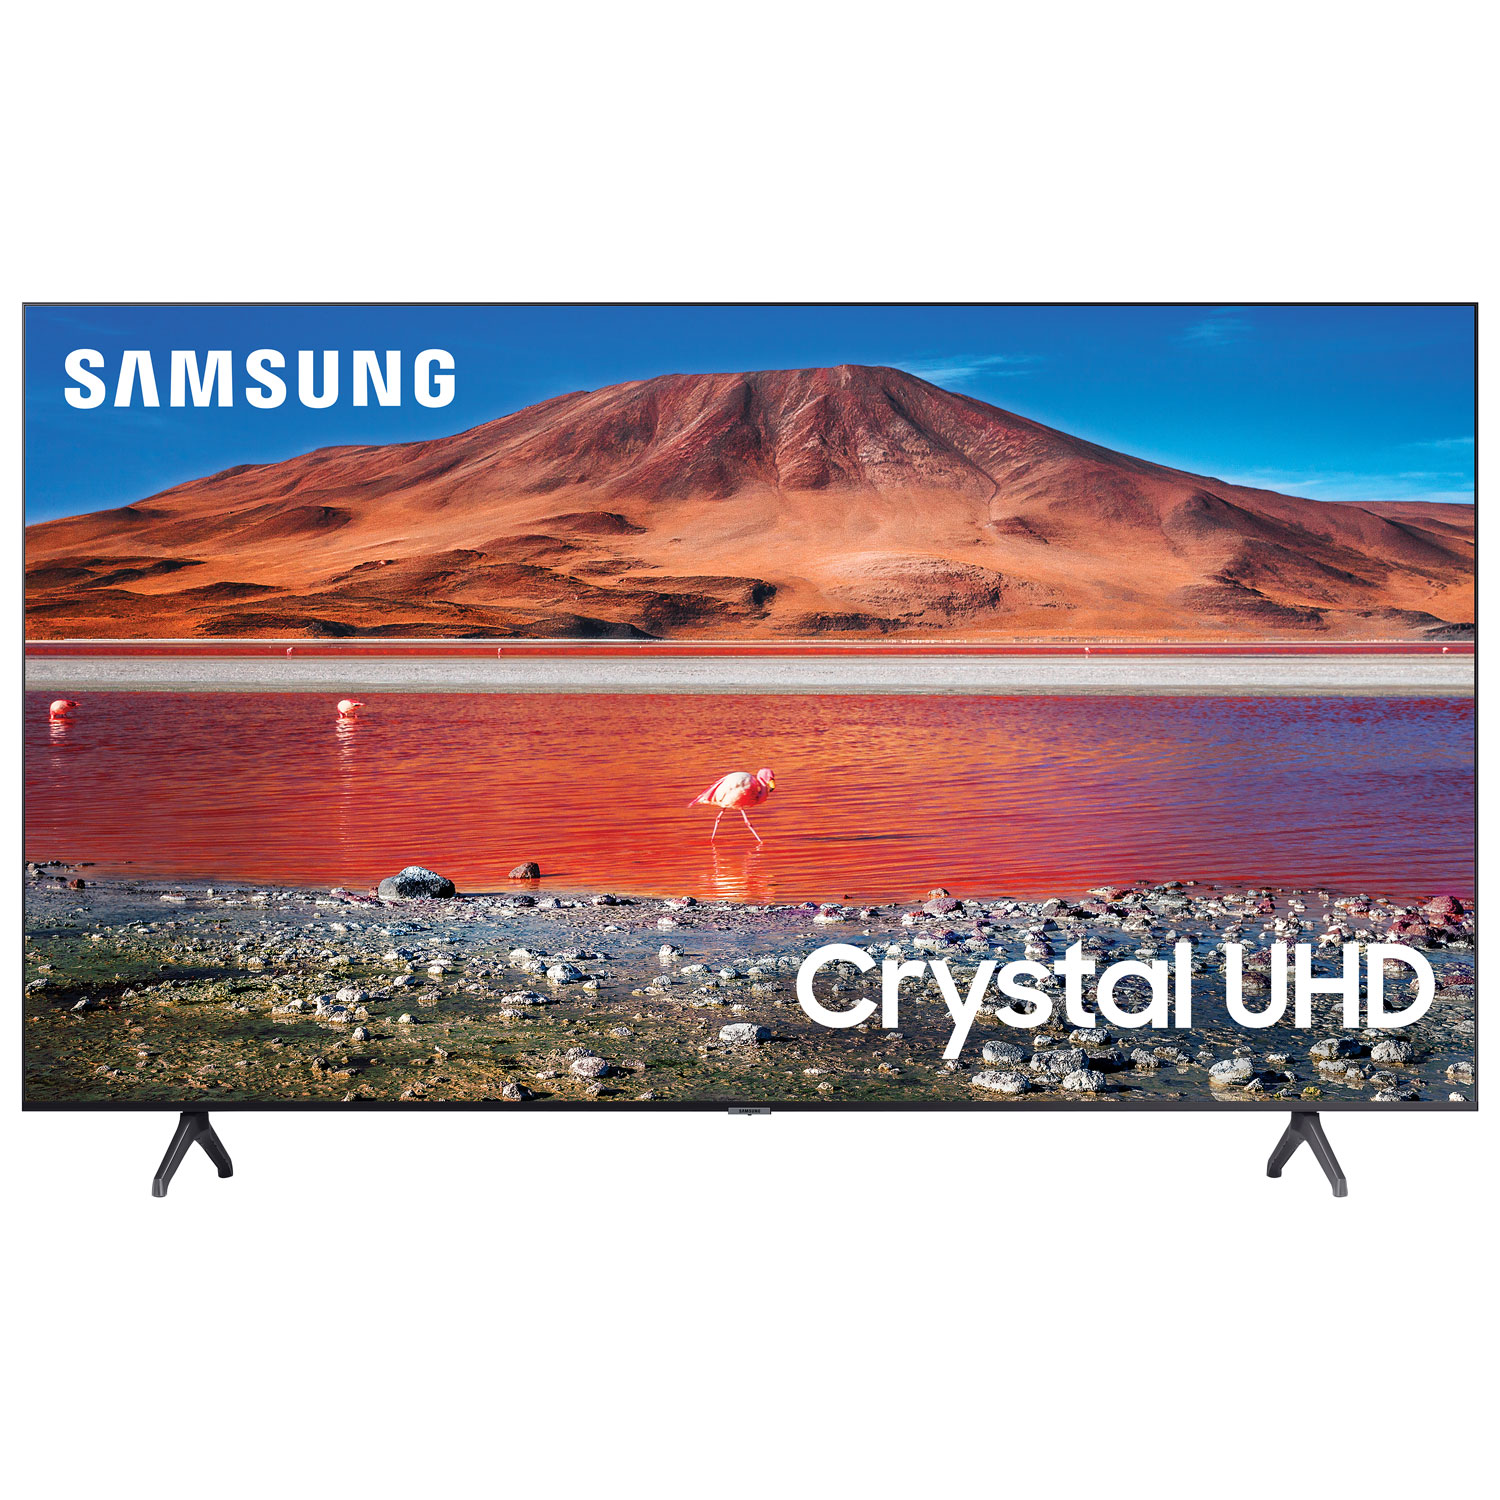 Samsung 43" 4K UHD HDR LED Tizen Smart TV (UN43TU7000FXZC) - Titan Grey